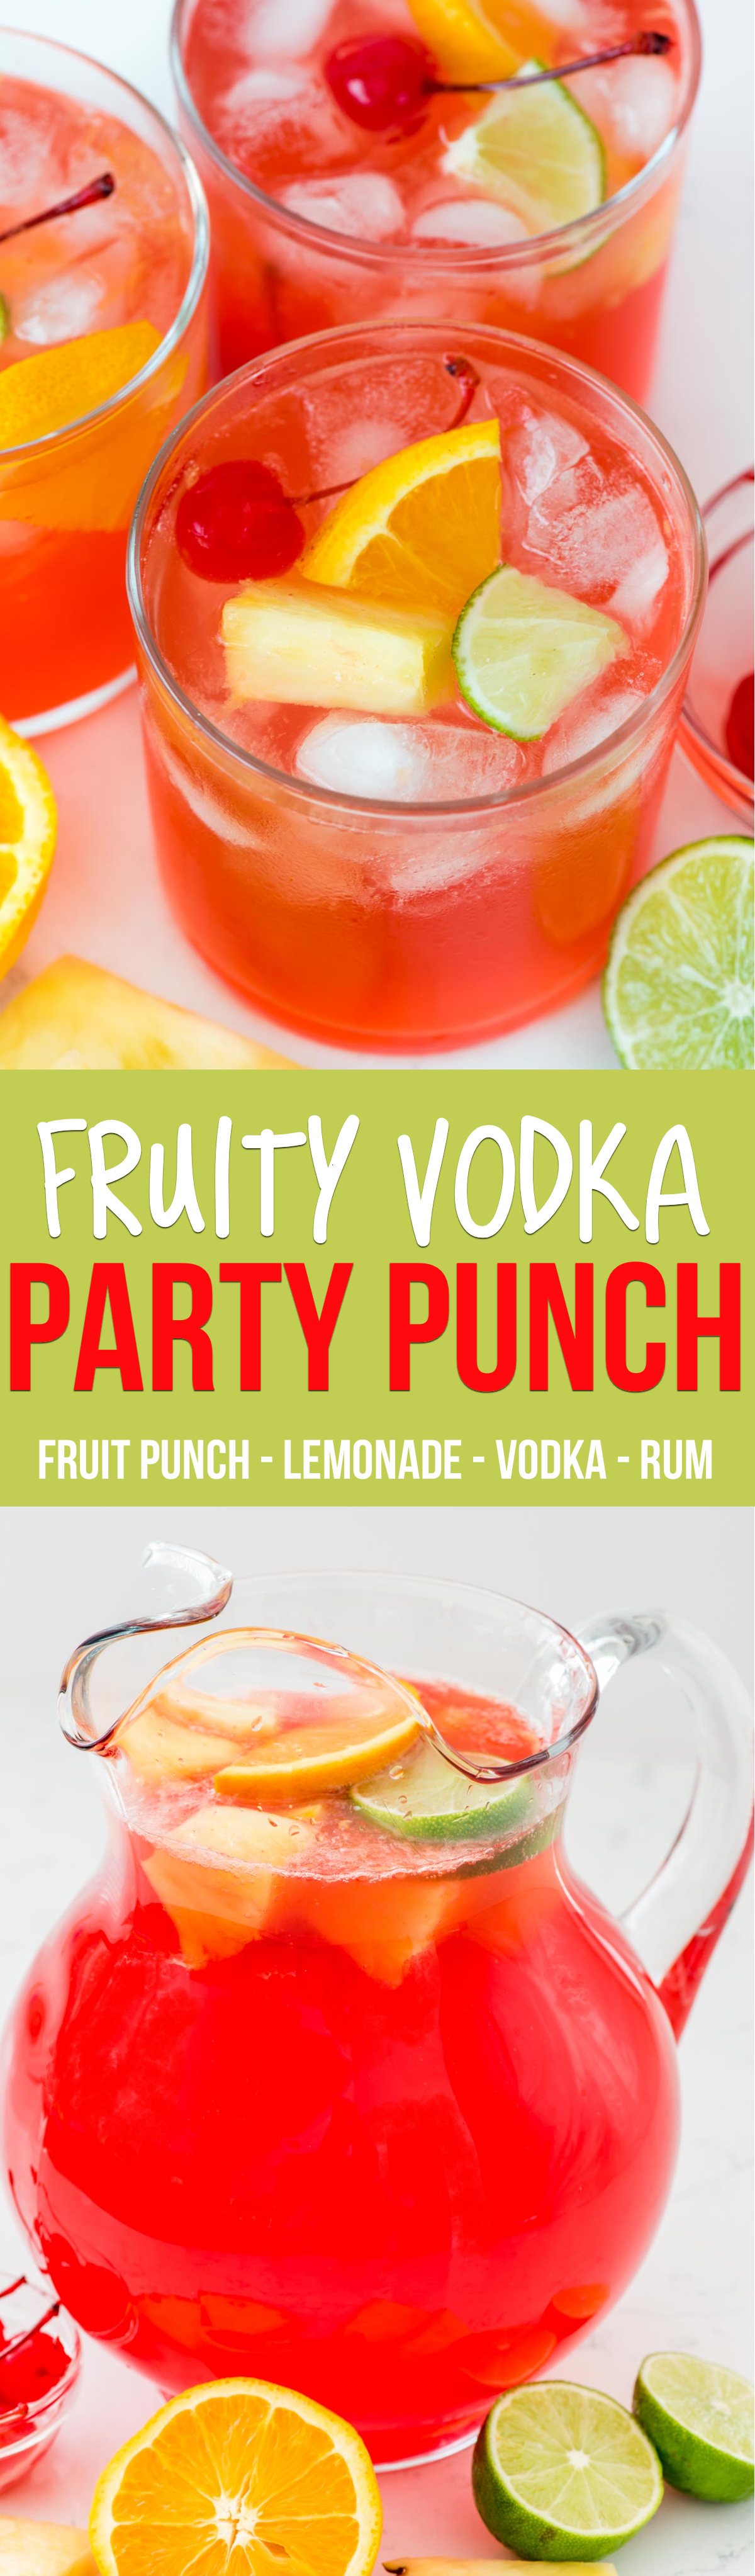 https://www.crazyforcrust.com/wp-content/uploads/2018/01/Fruity-Vodka-Party-Punch.jpg